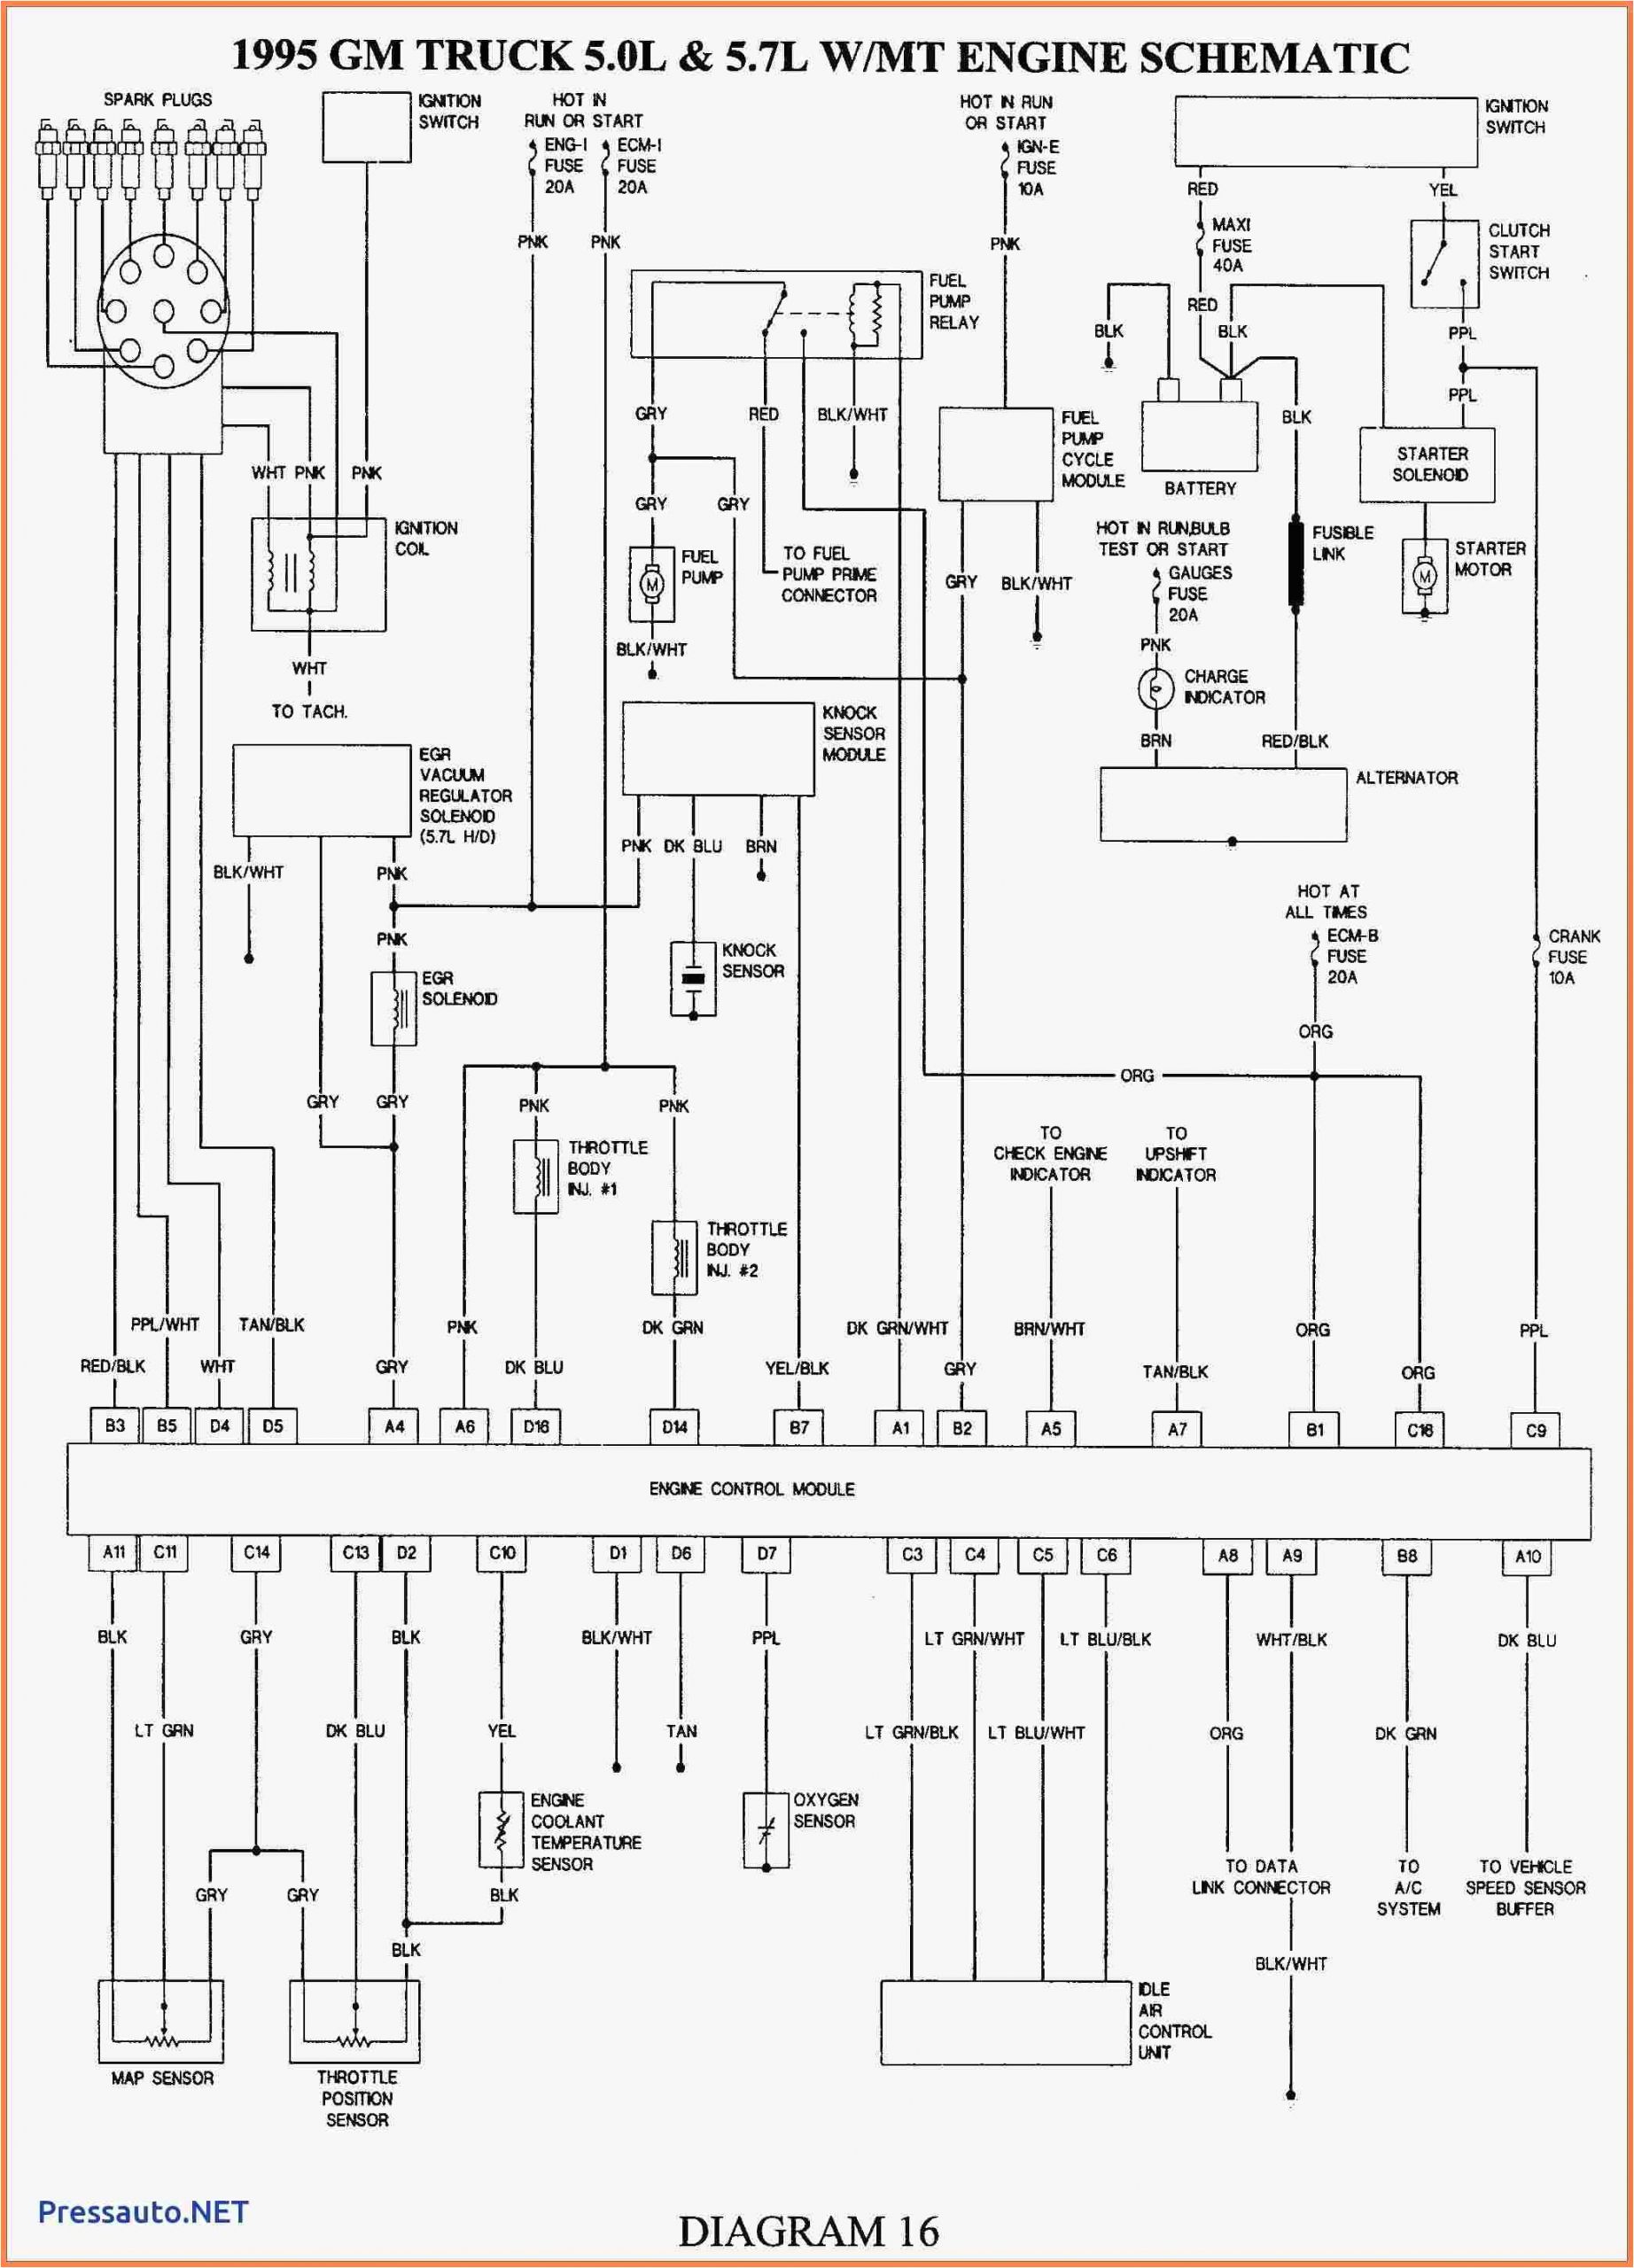 2003 chevy silverado wiring diagram 1500 1996 control module ecm location also 2000 of 2002 1985 c10 a c jpg